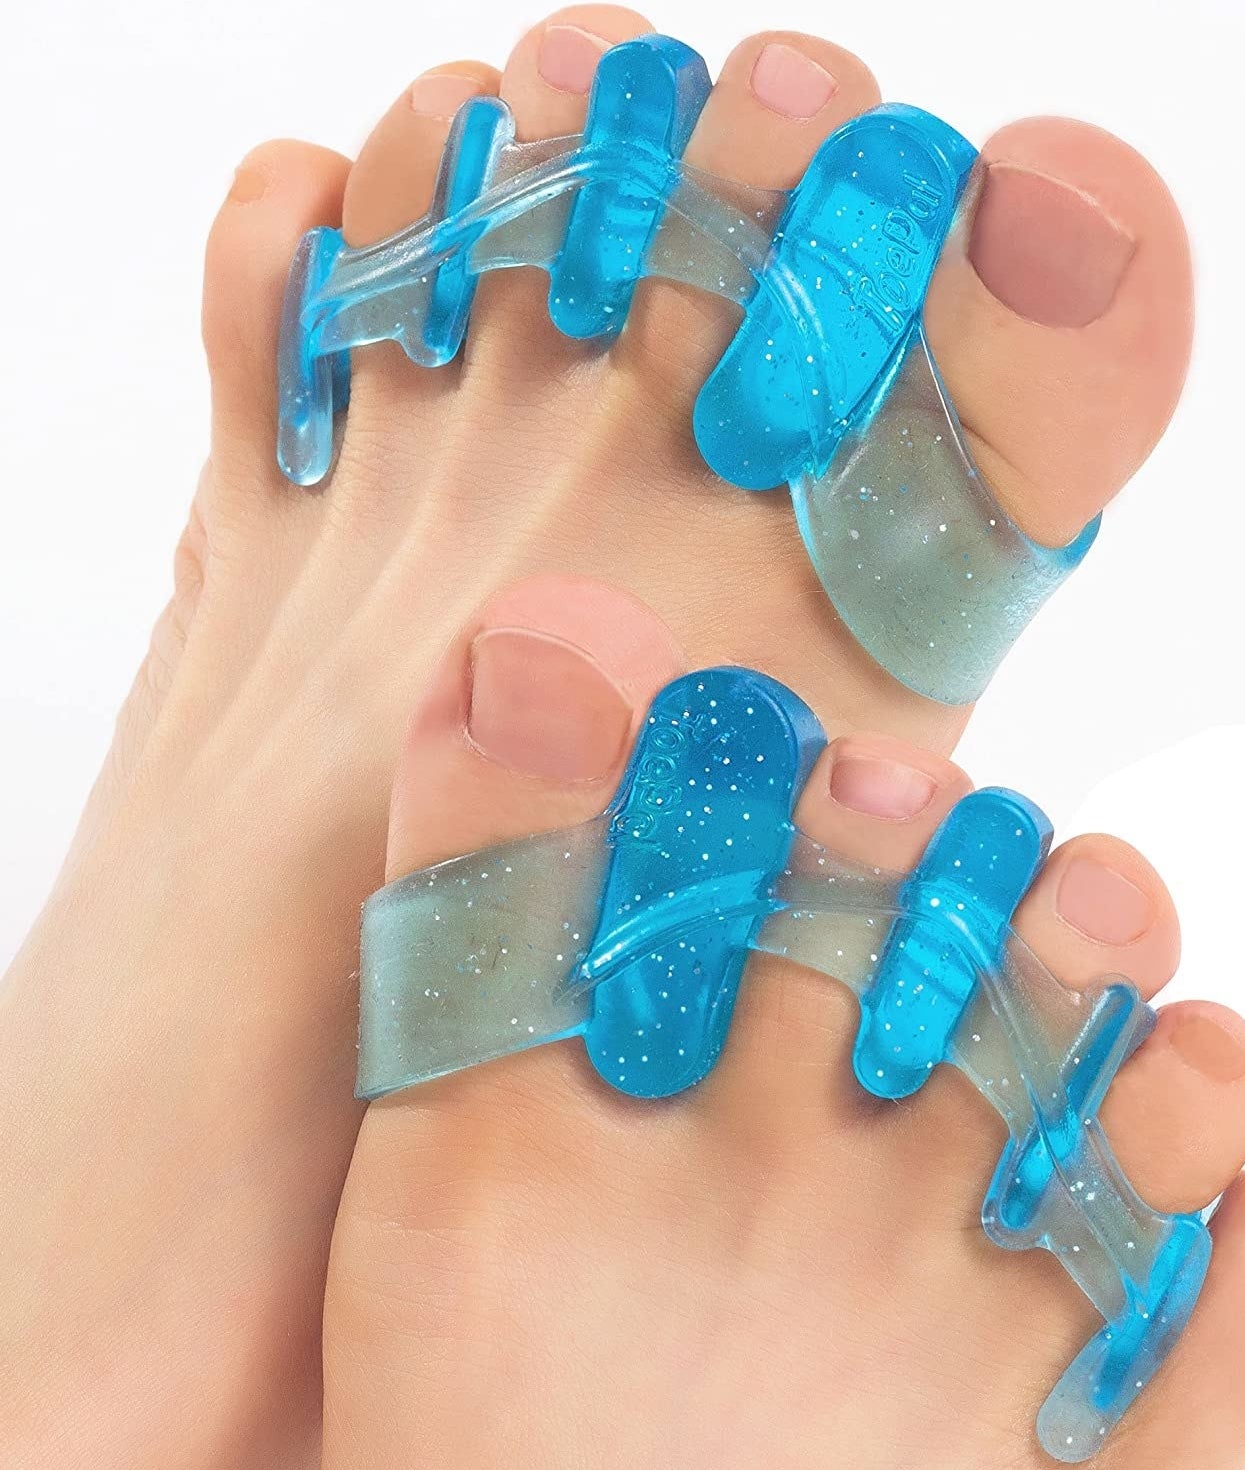 Two feet with a pair of gel separators between each toe